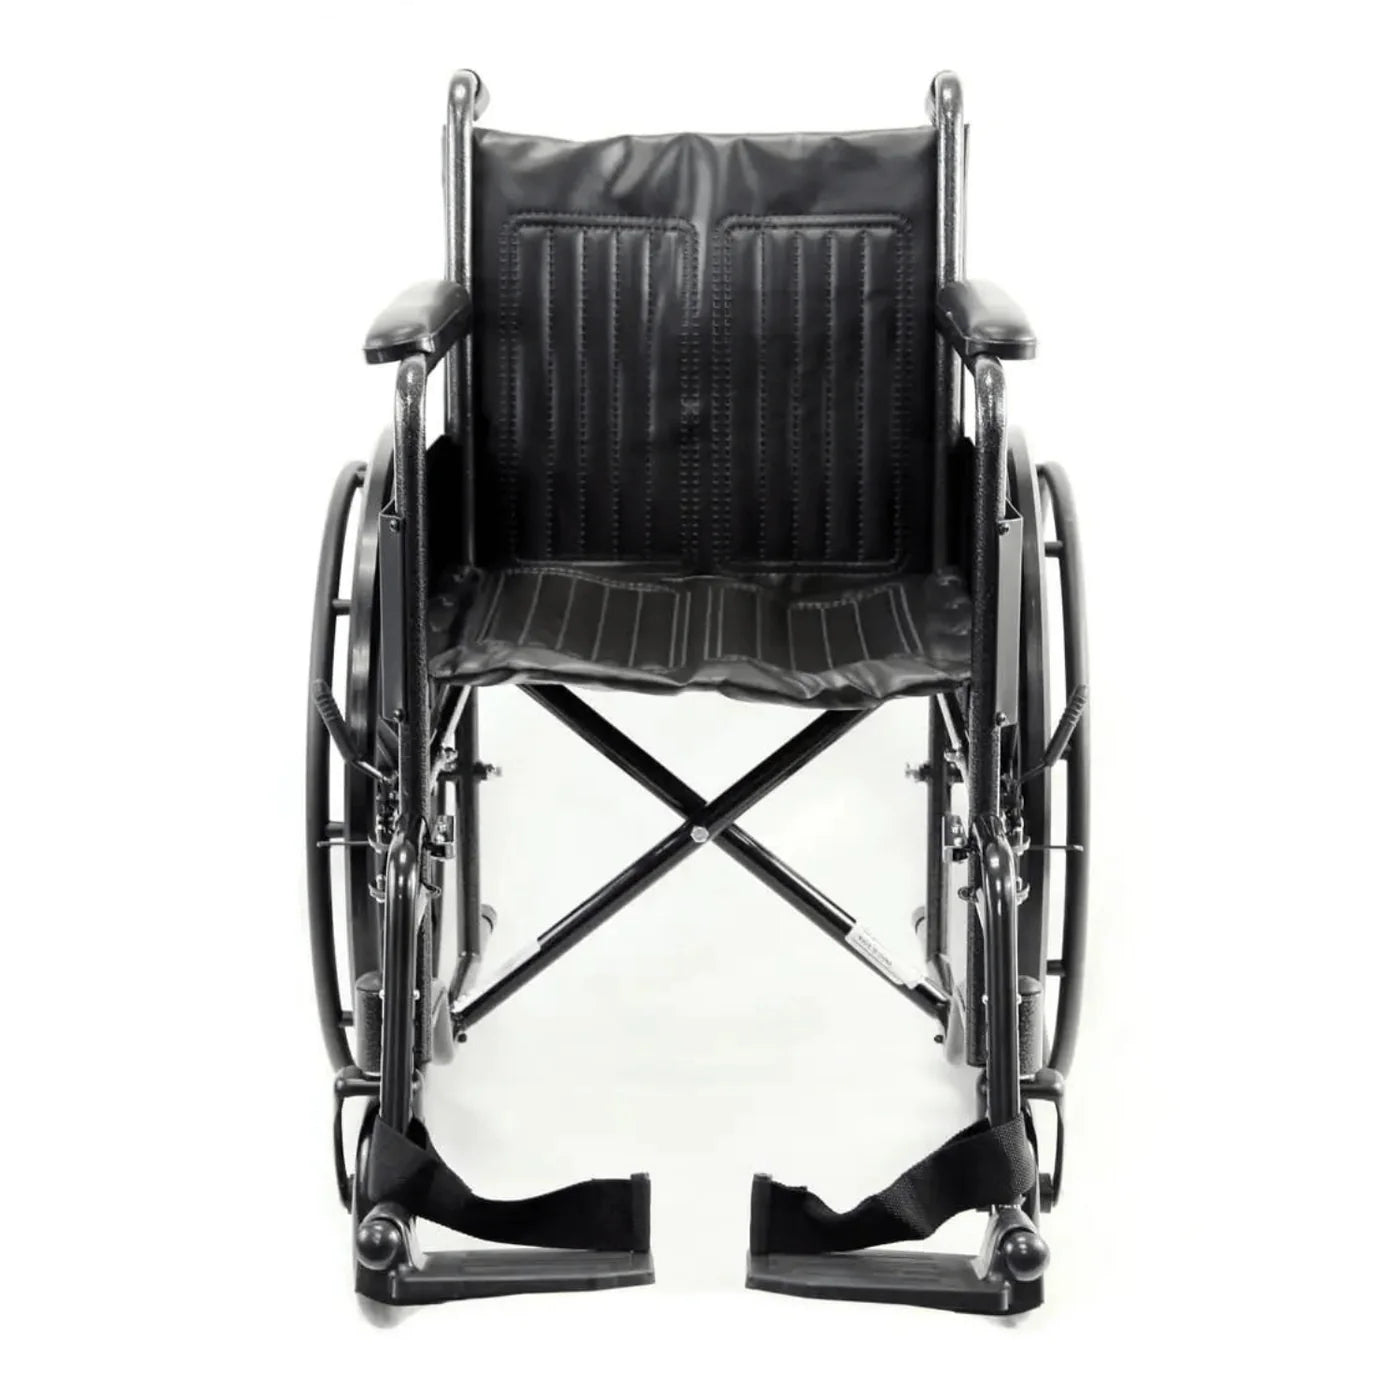 Karman KN-800T Steel Wheelchair with Fixed Armrest Standard Wheelchairs Karman Healthcare   